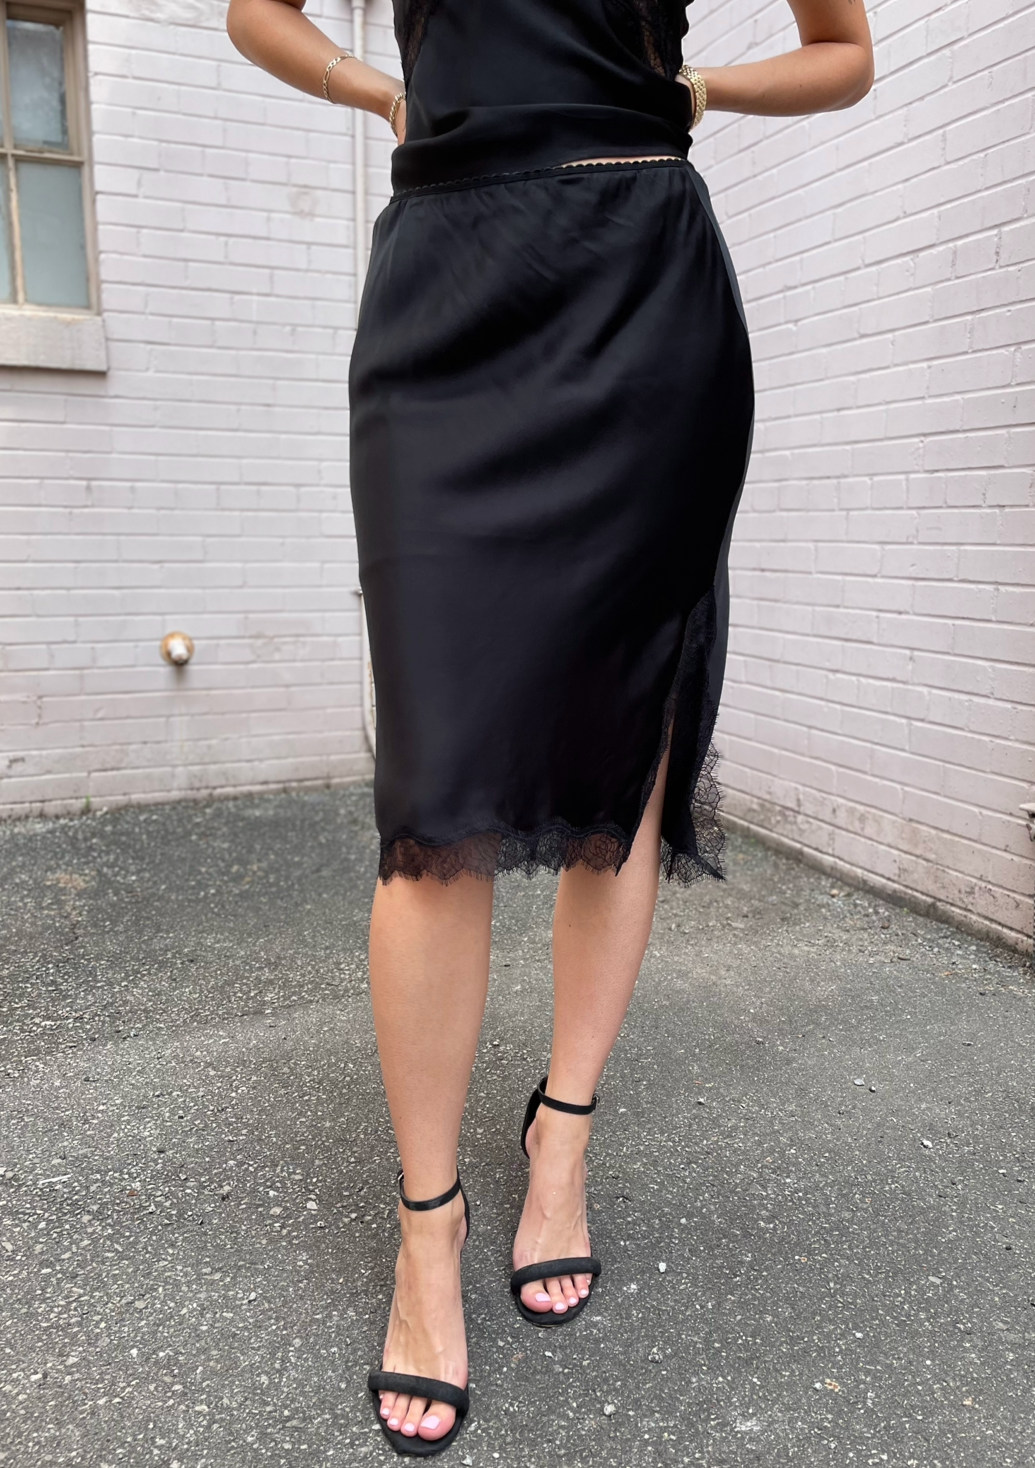 HERSKIND Black Satin Slip Skirt w/ Lace Detail